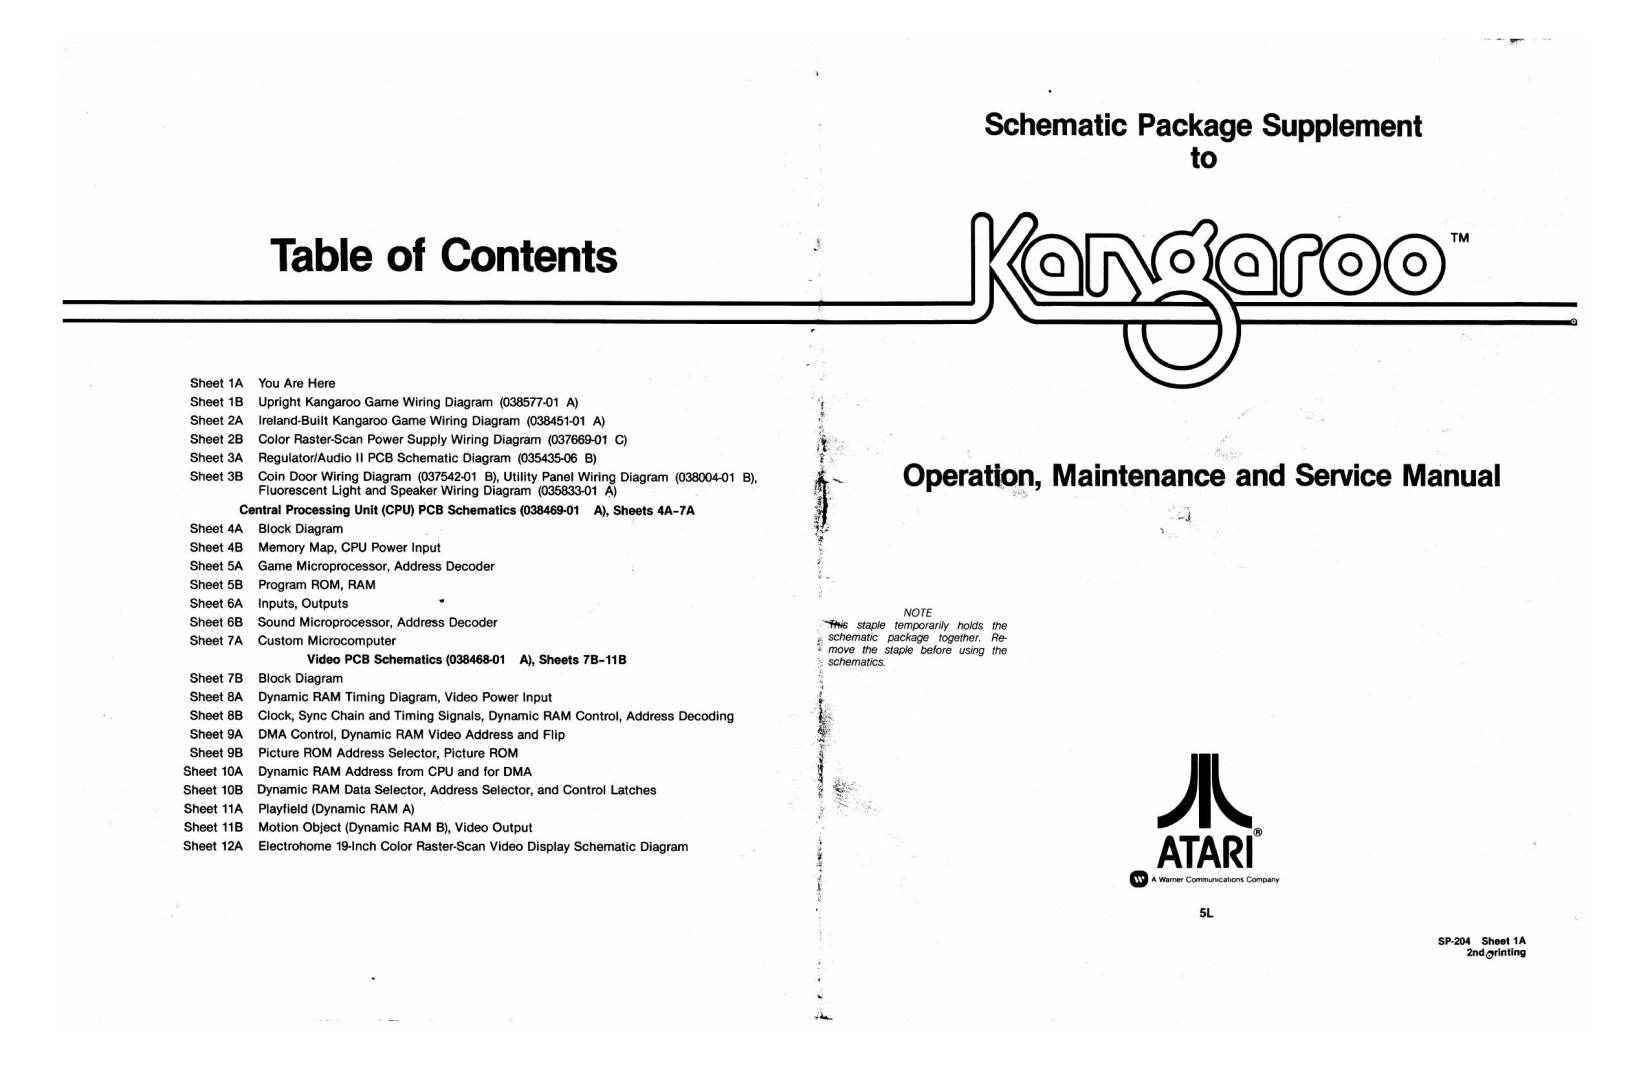 Kangaroo SP-204 2nd Printing